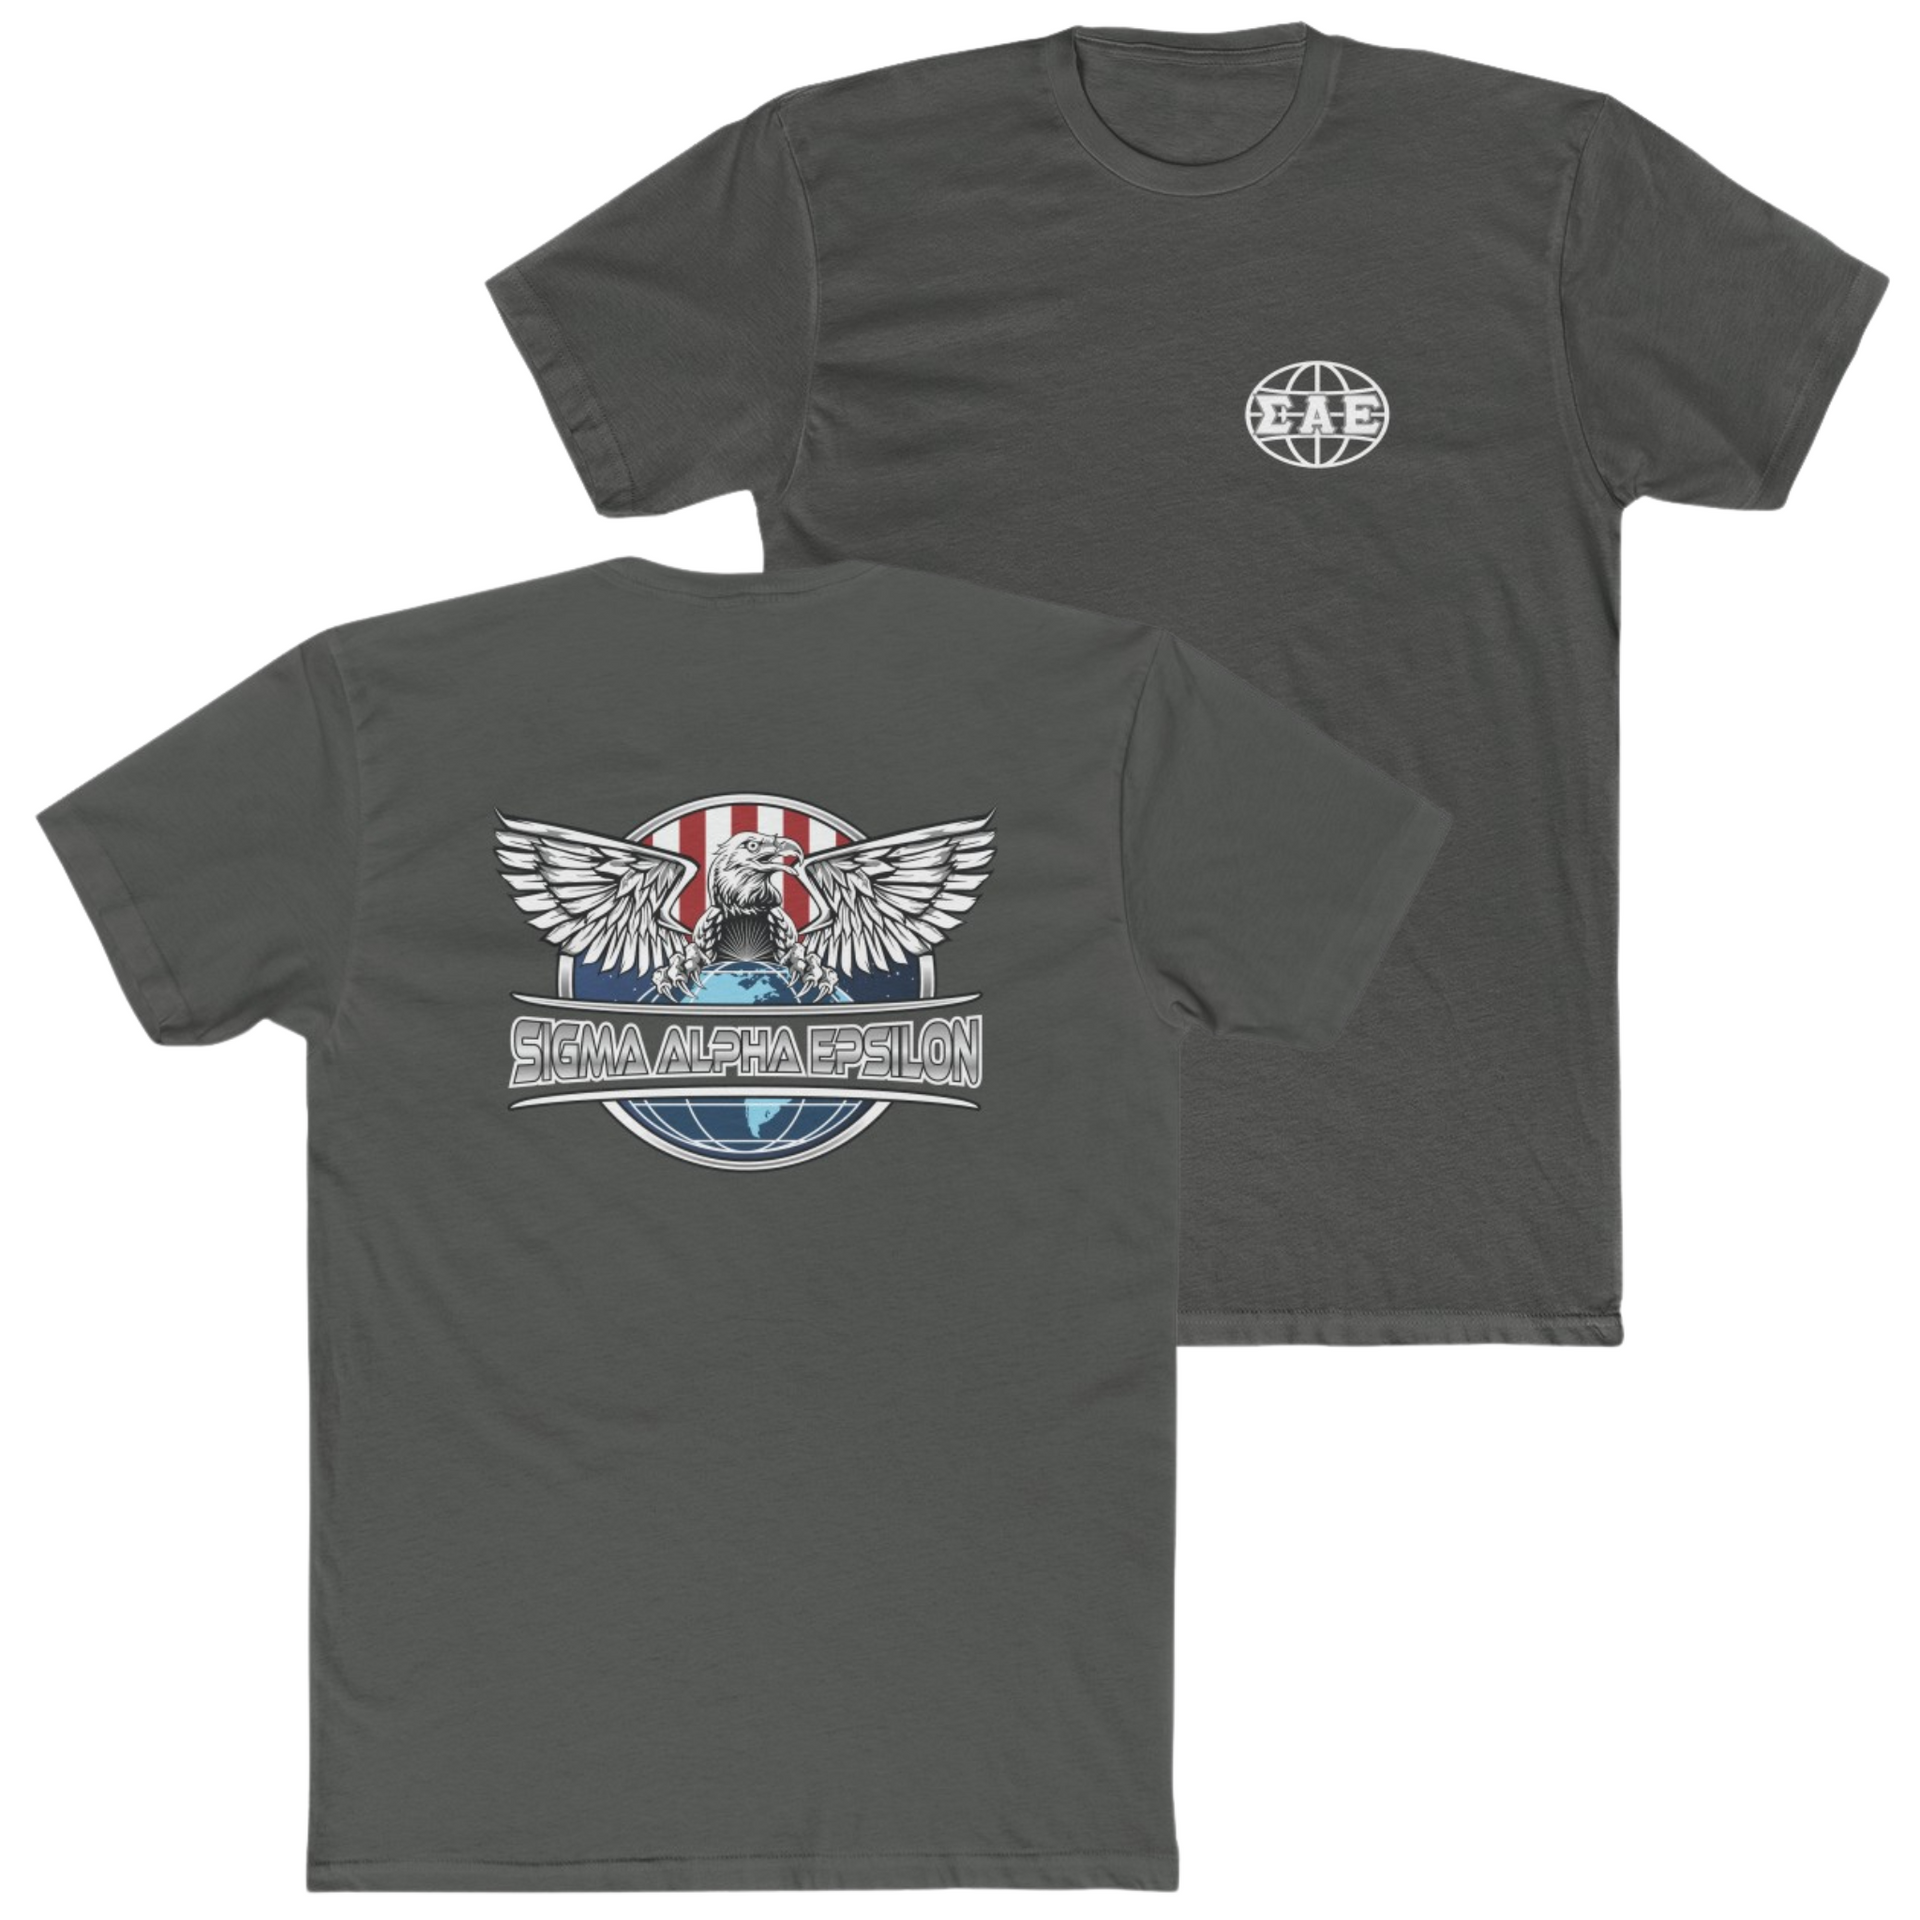 Grey Sigma Alpha Epsilon Graphic T-Shirt | The Fraternal Order | Sigma Alpha Epsilon Clothing and Merchandise